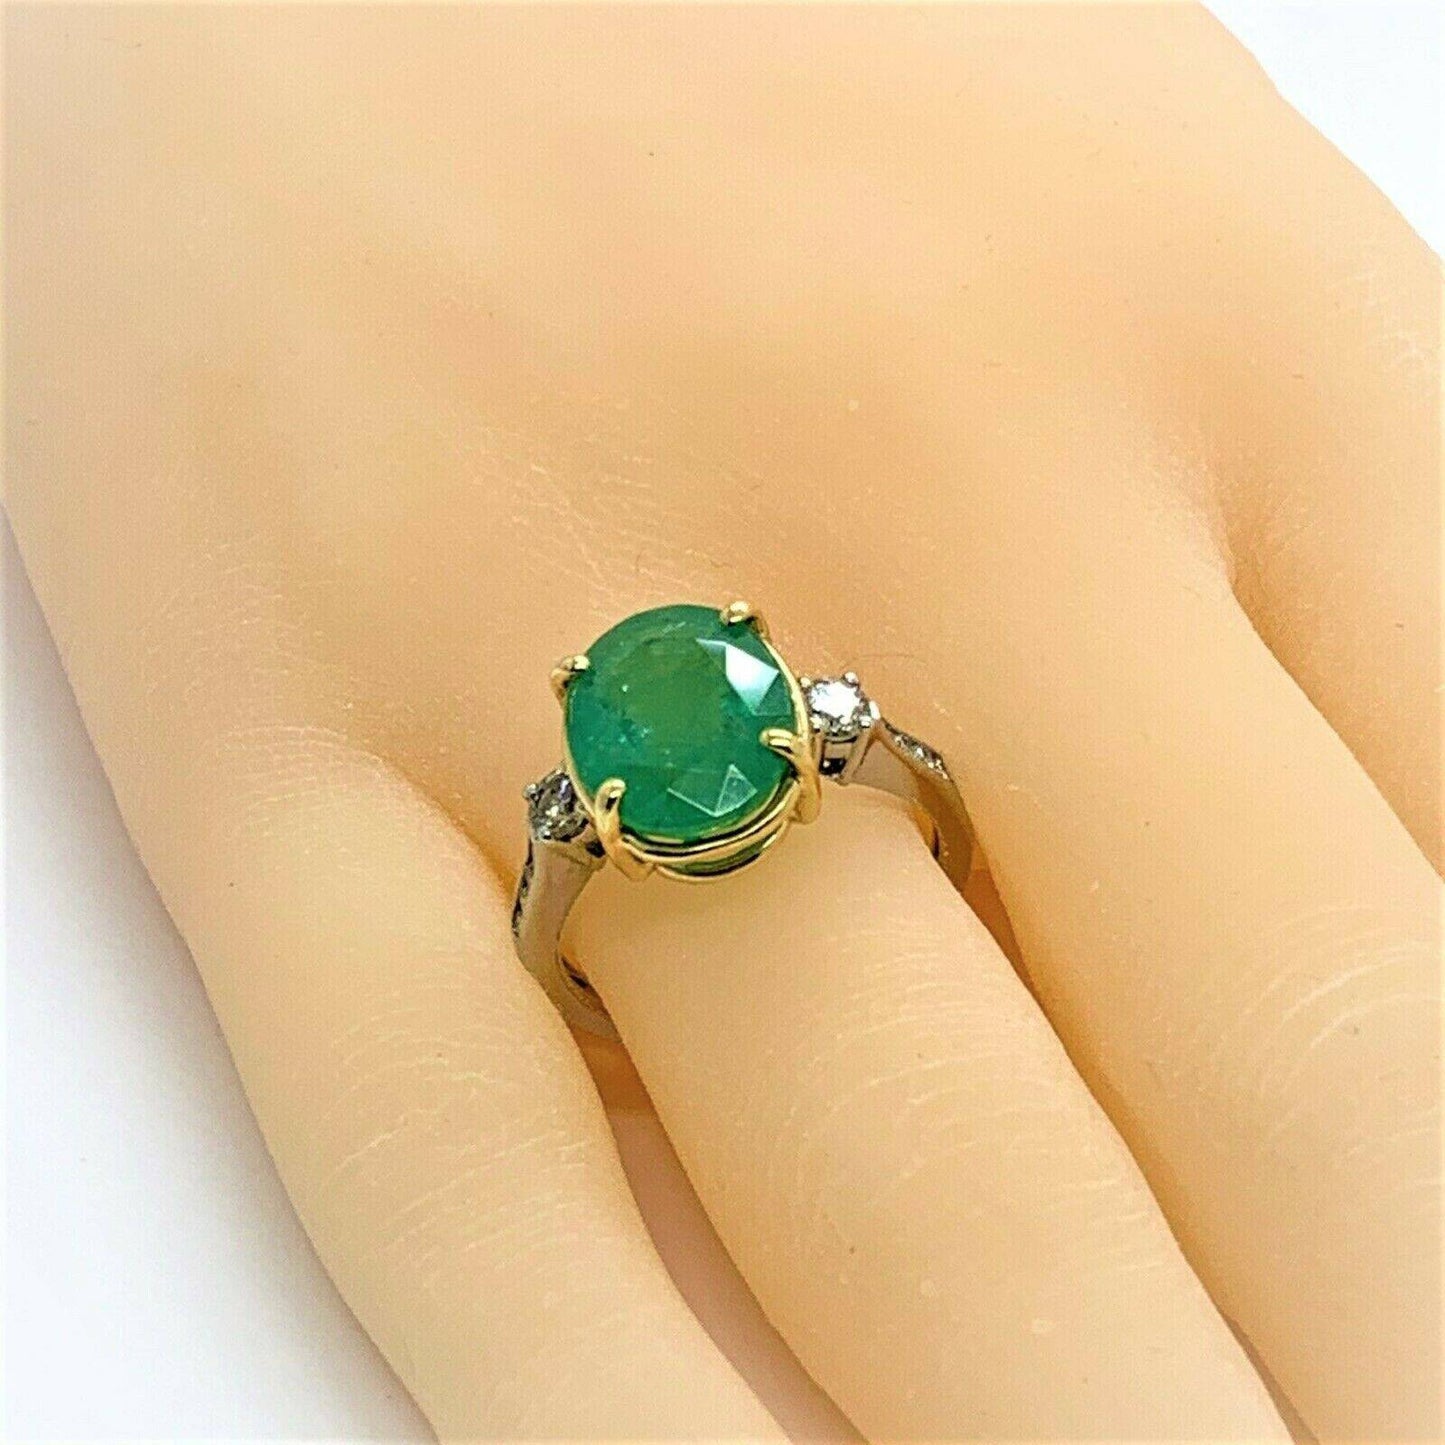 Diamond Emerald Ring 14k Gold 6.65 TCW Women Certified $5,950 915309 - Certified Estate Jewelry